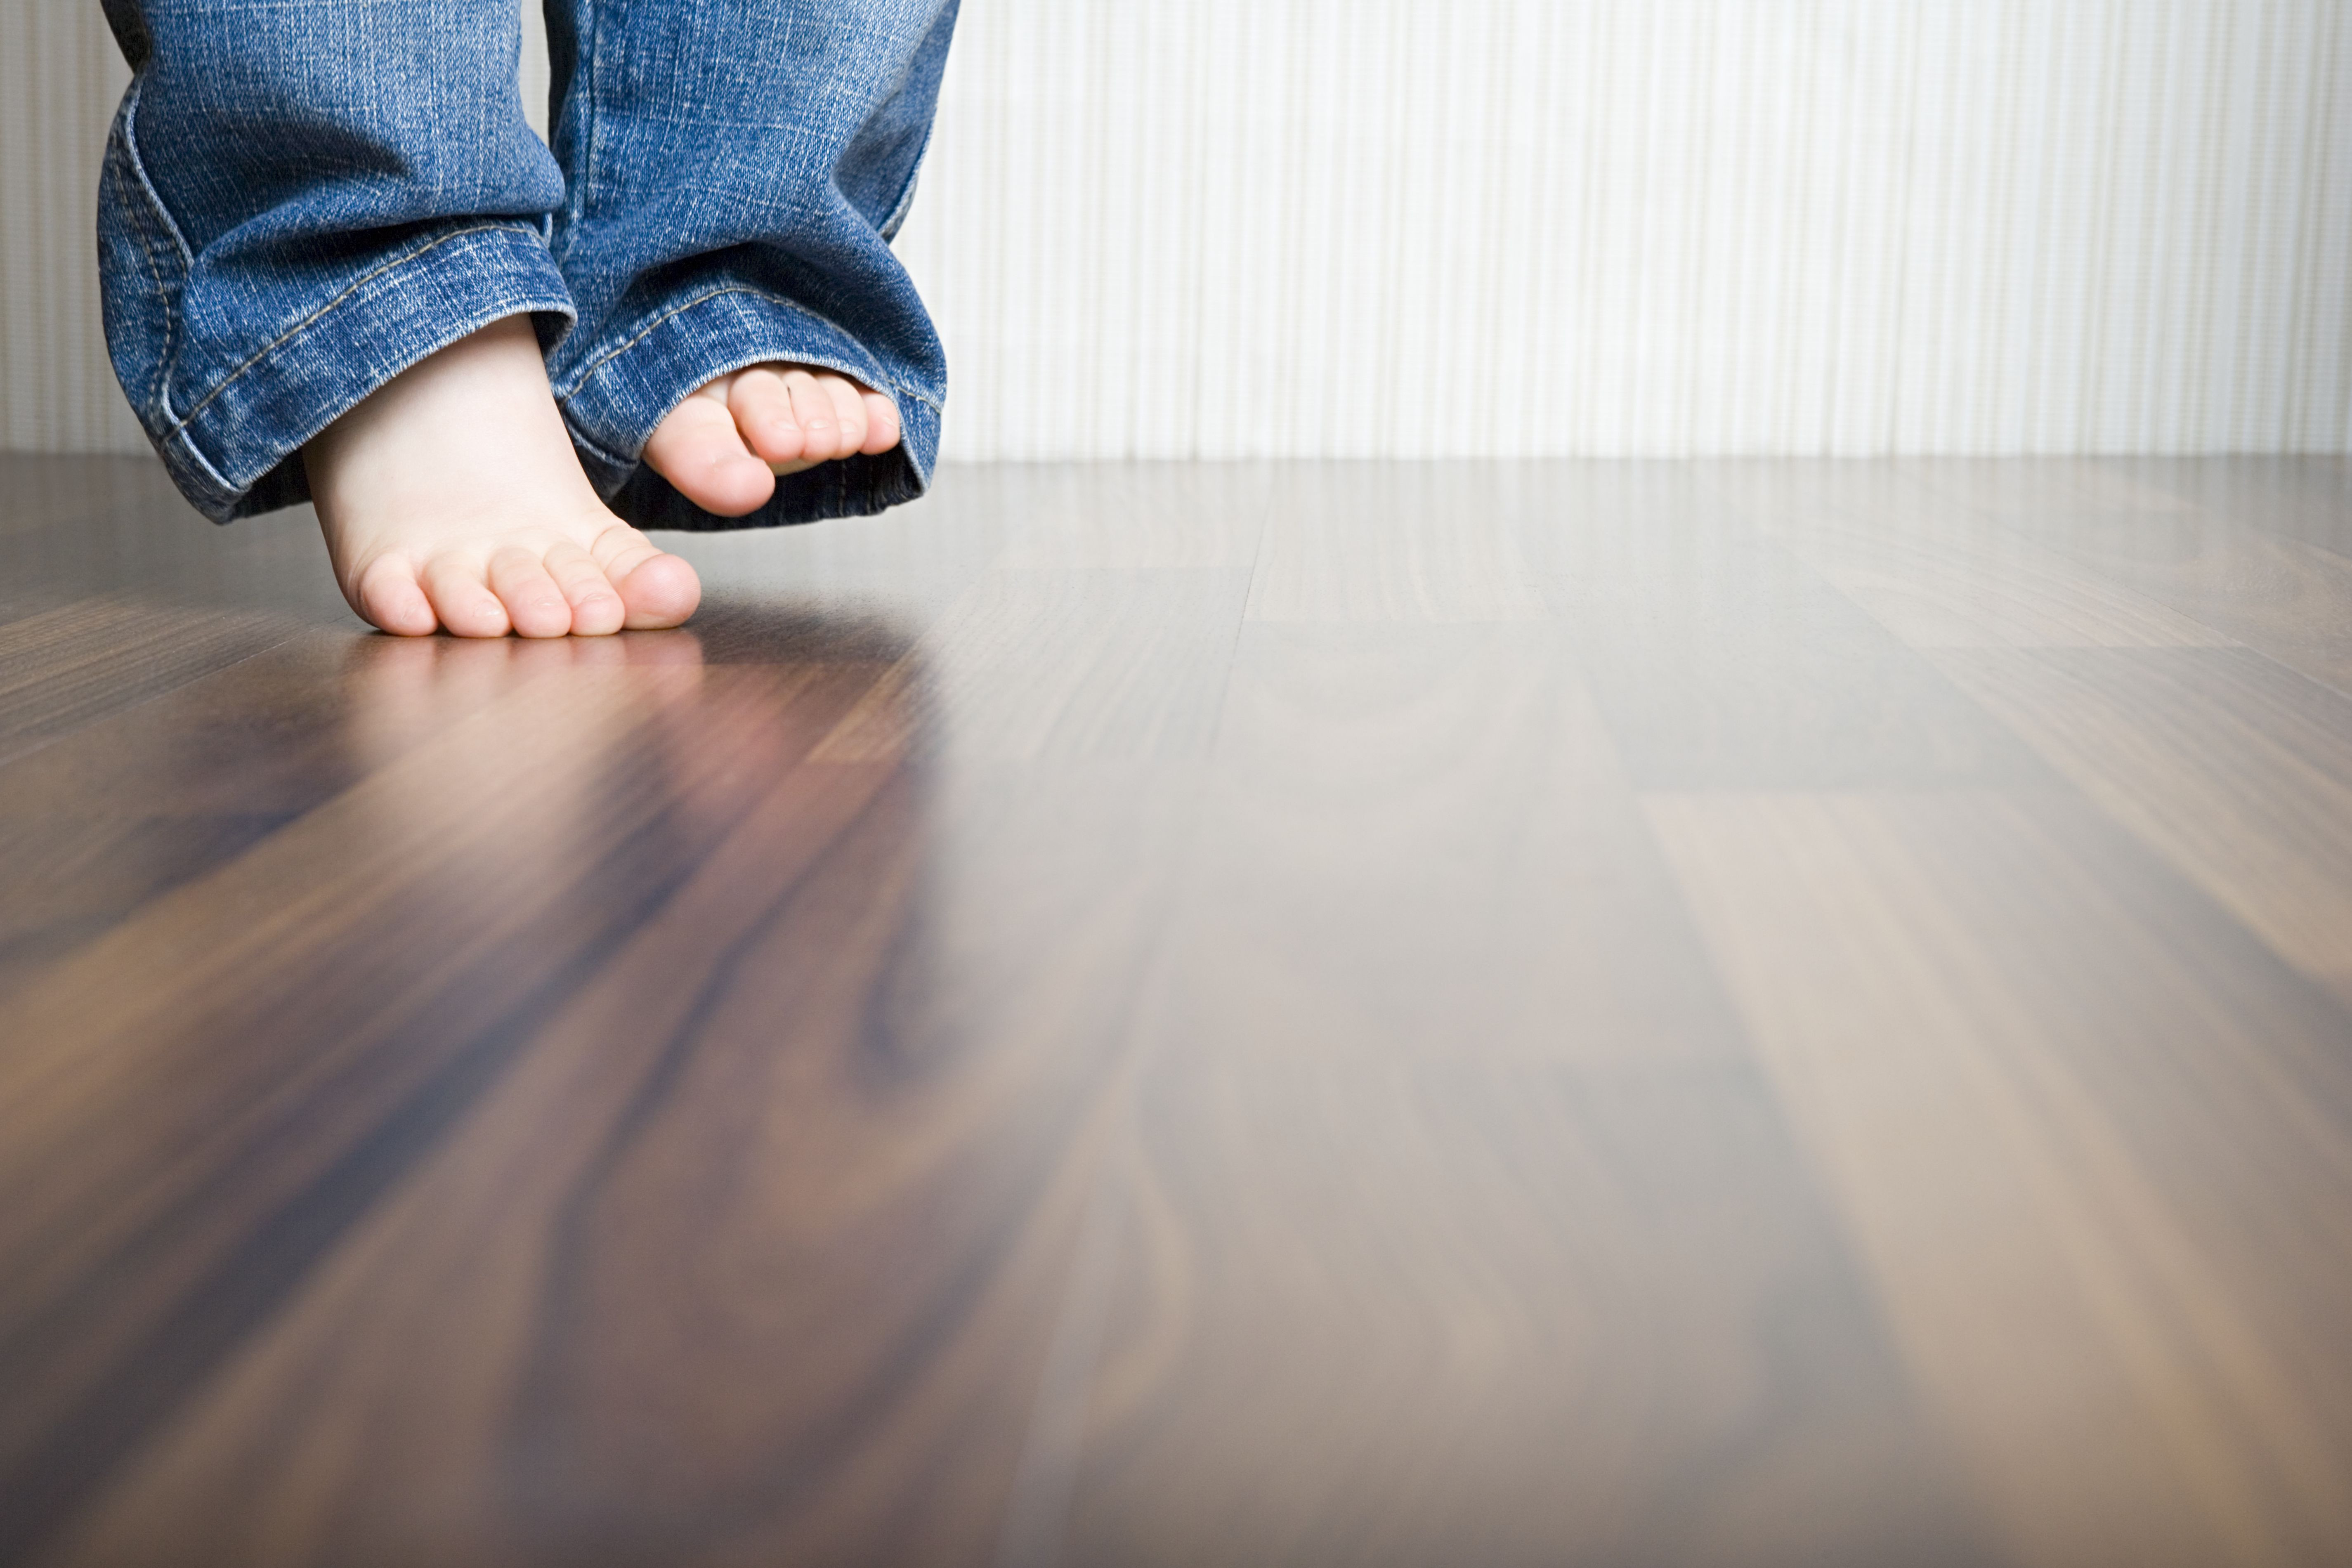 sanding hardwood floors grit of how to clean hardwood floors best way to clean wood flooring throughout 1512149908 gettyimages 75403973